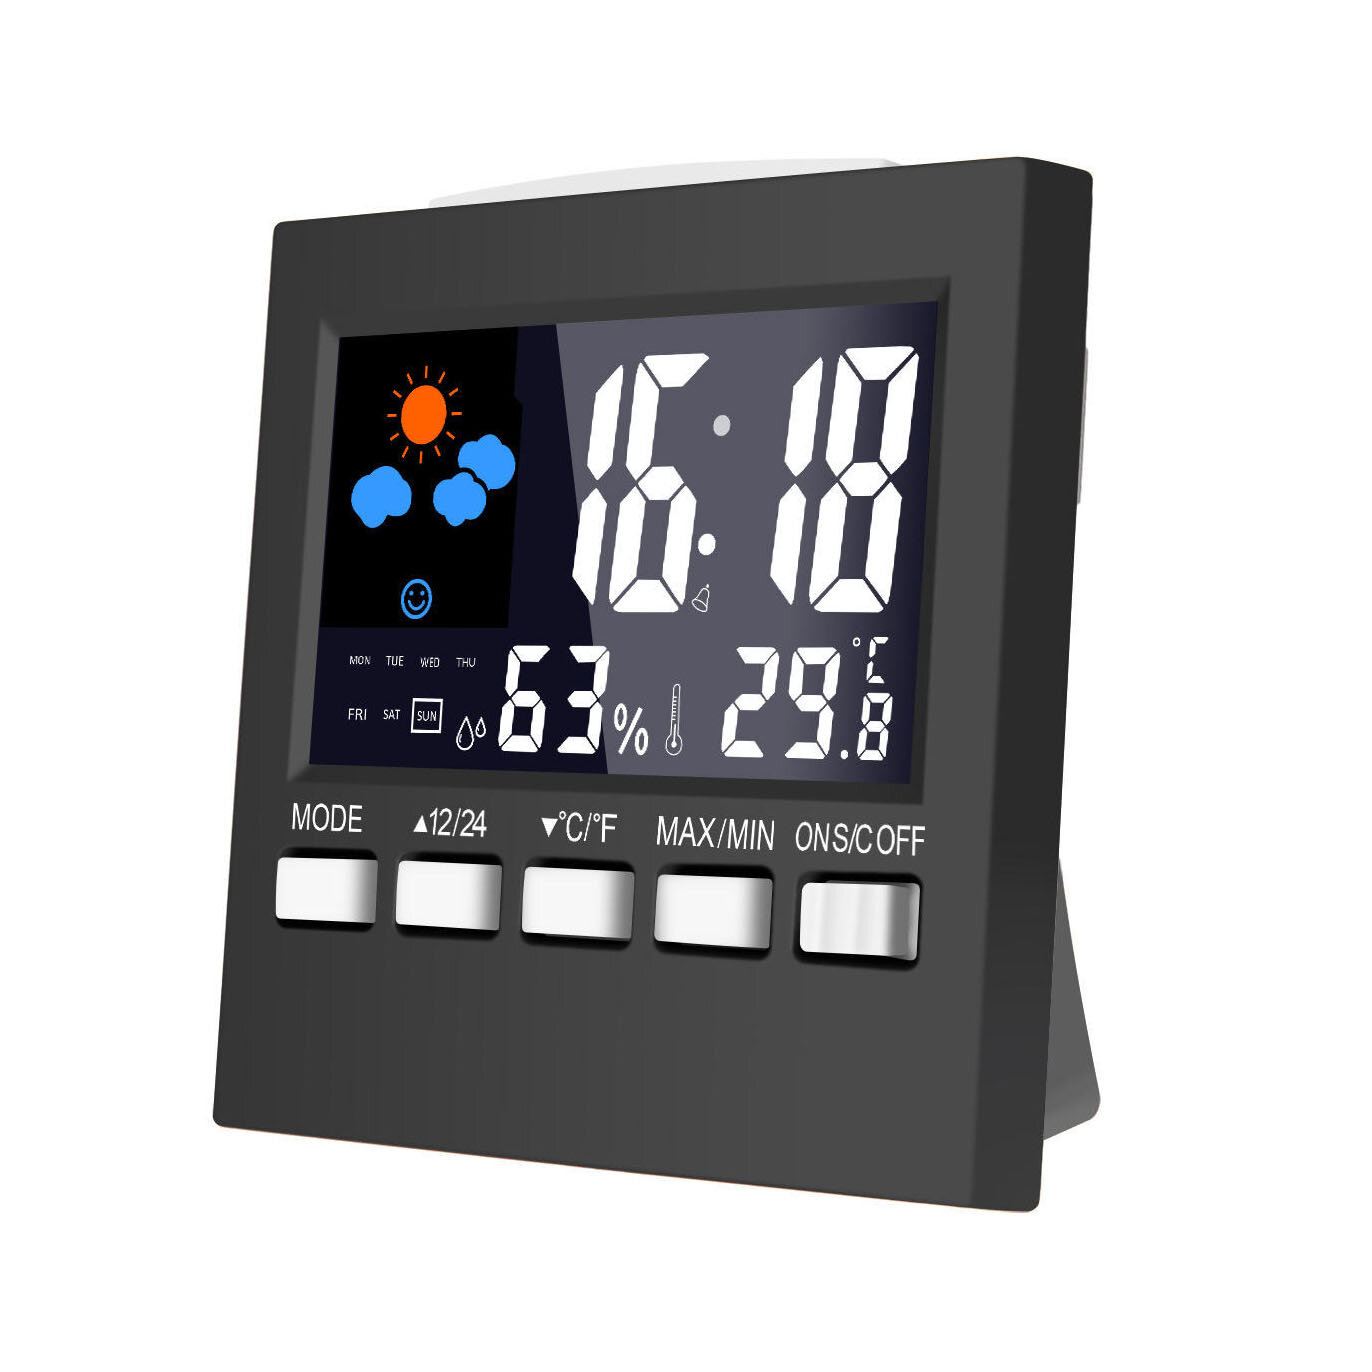 Loskii DC-001 Temperature Humidity Alarm Clock Coupon Price (9.99 USD)